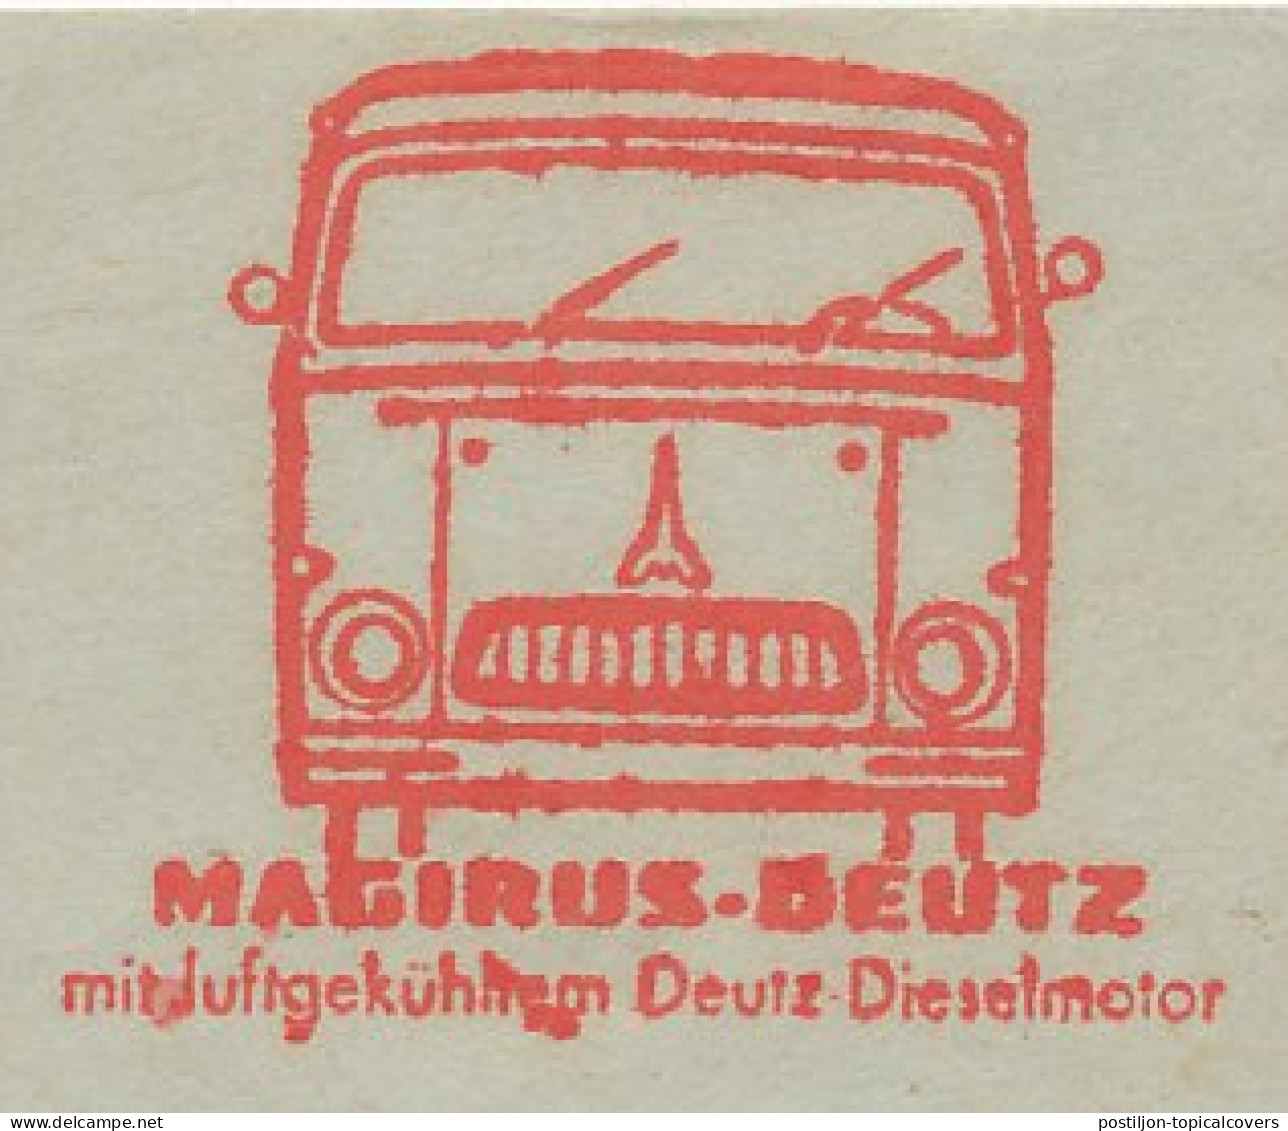 Meter Cut Germany 1961 Truck - Magirus Deutz - Trucks